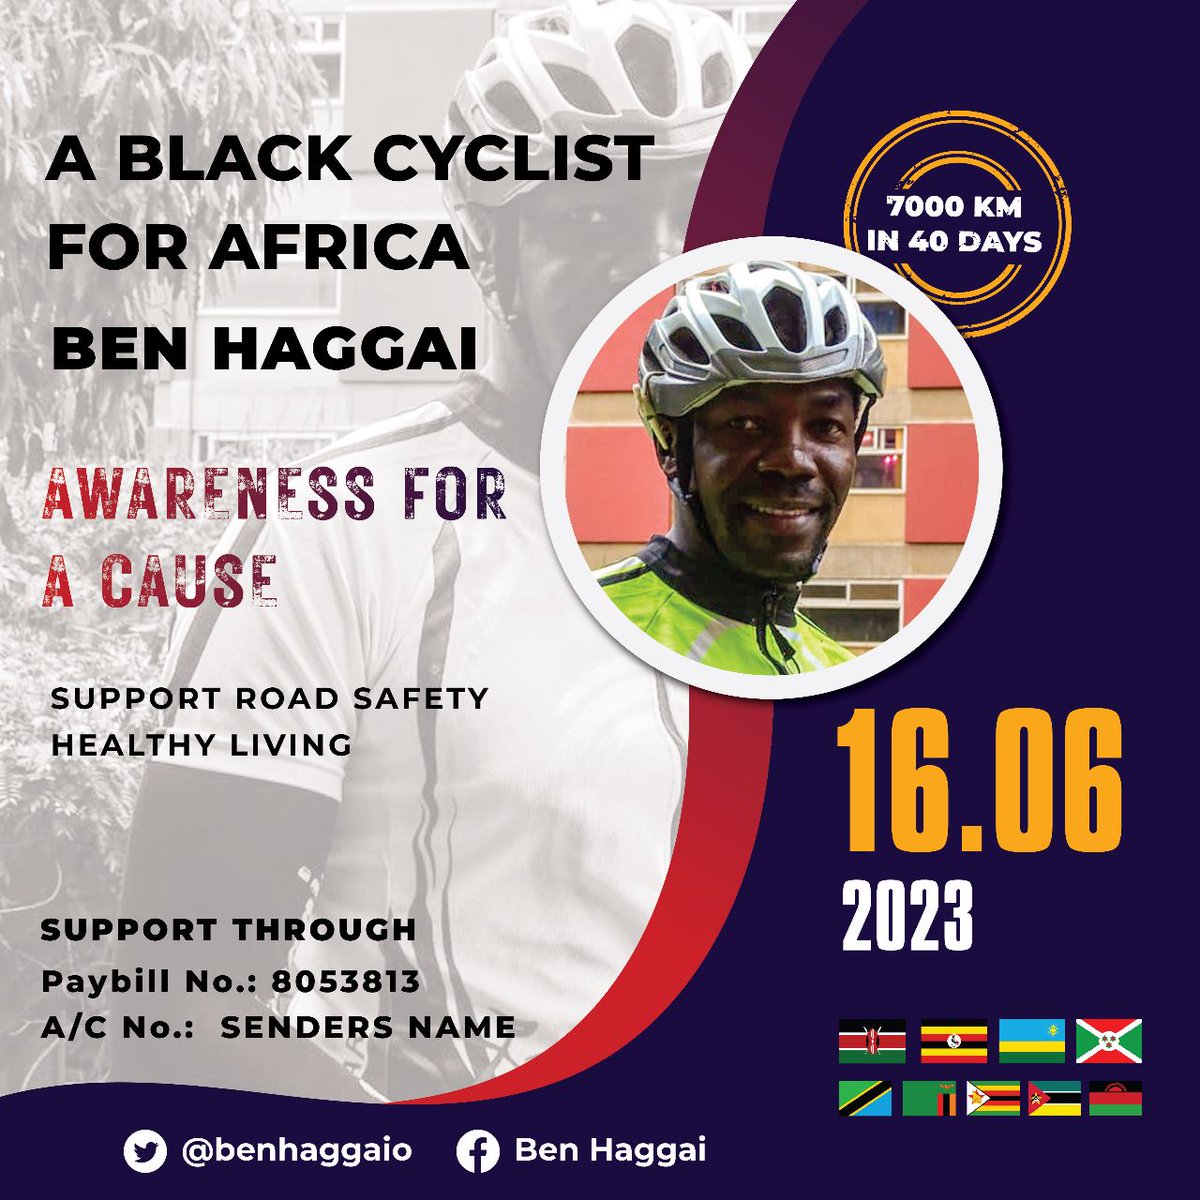 Calling on Cyclists in #Jinja #Iganga #Mukono #Kampala to escort our Ssebo @benhaggaio as he cycles across Uganda. 

See the poster for details 
@DailyMonitor @jinjacity @LoveUgSafaris @POATVUganda @ntvuganda 

#ShareTheRoad
#BlackCyclistForAfrica
#benhaggaio
#40days9Countries